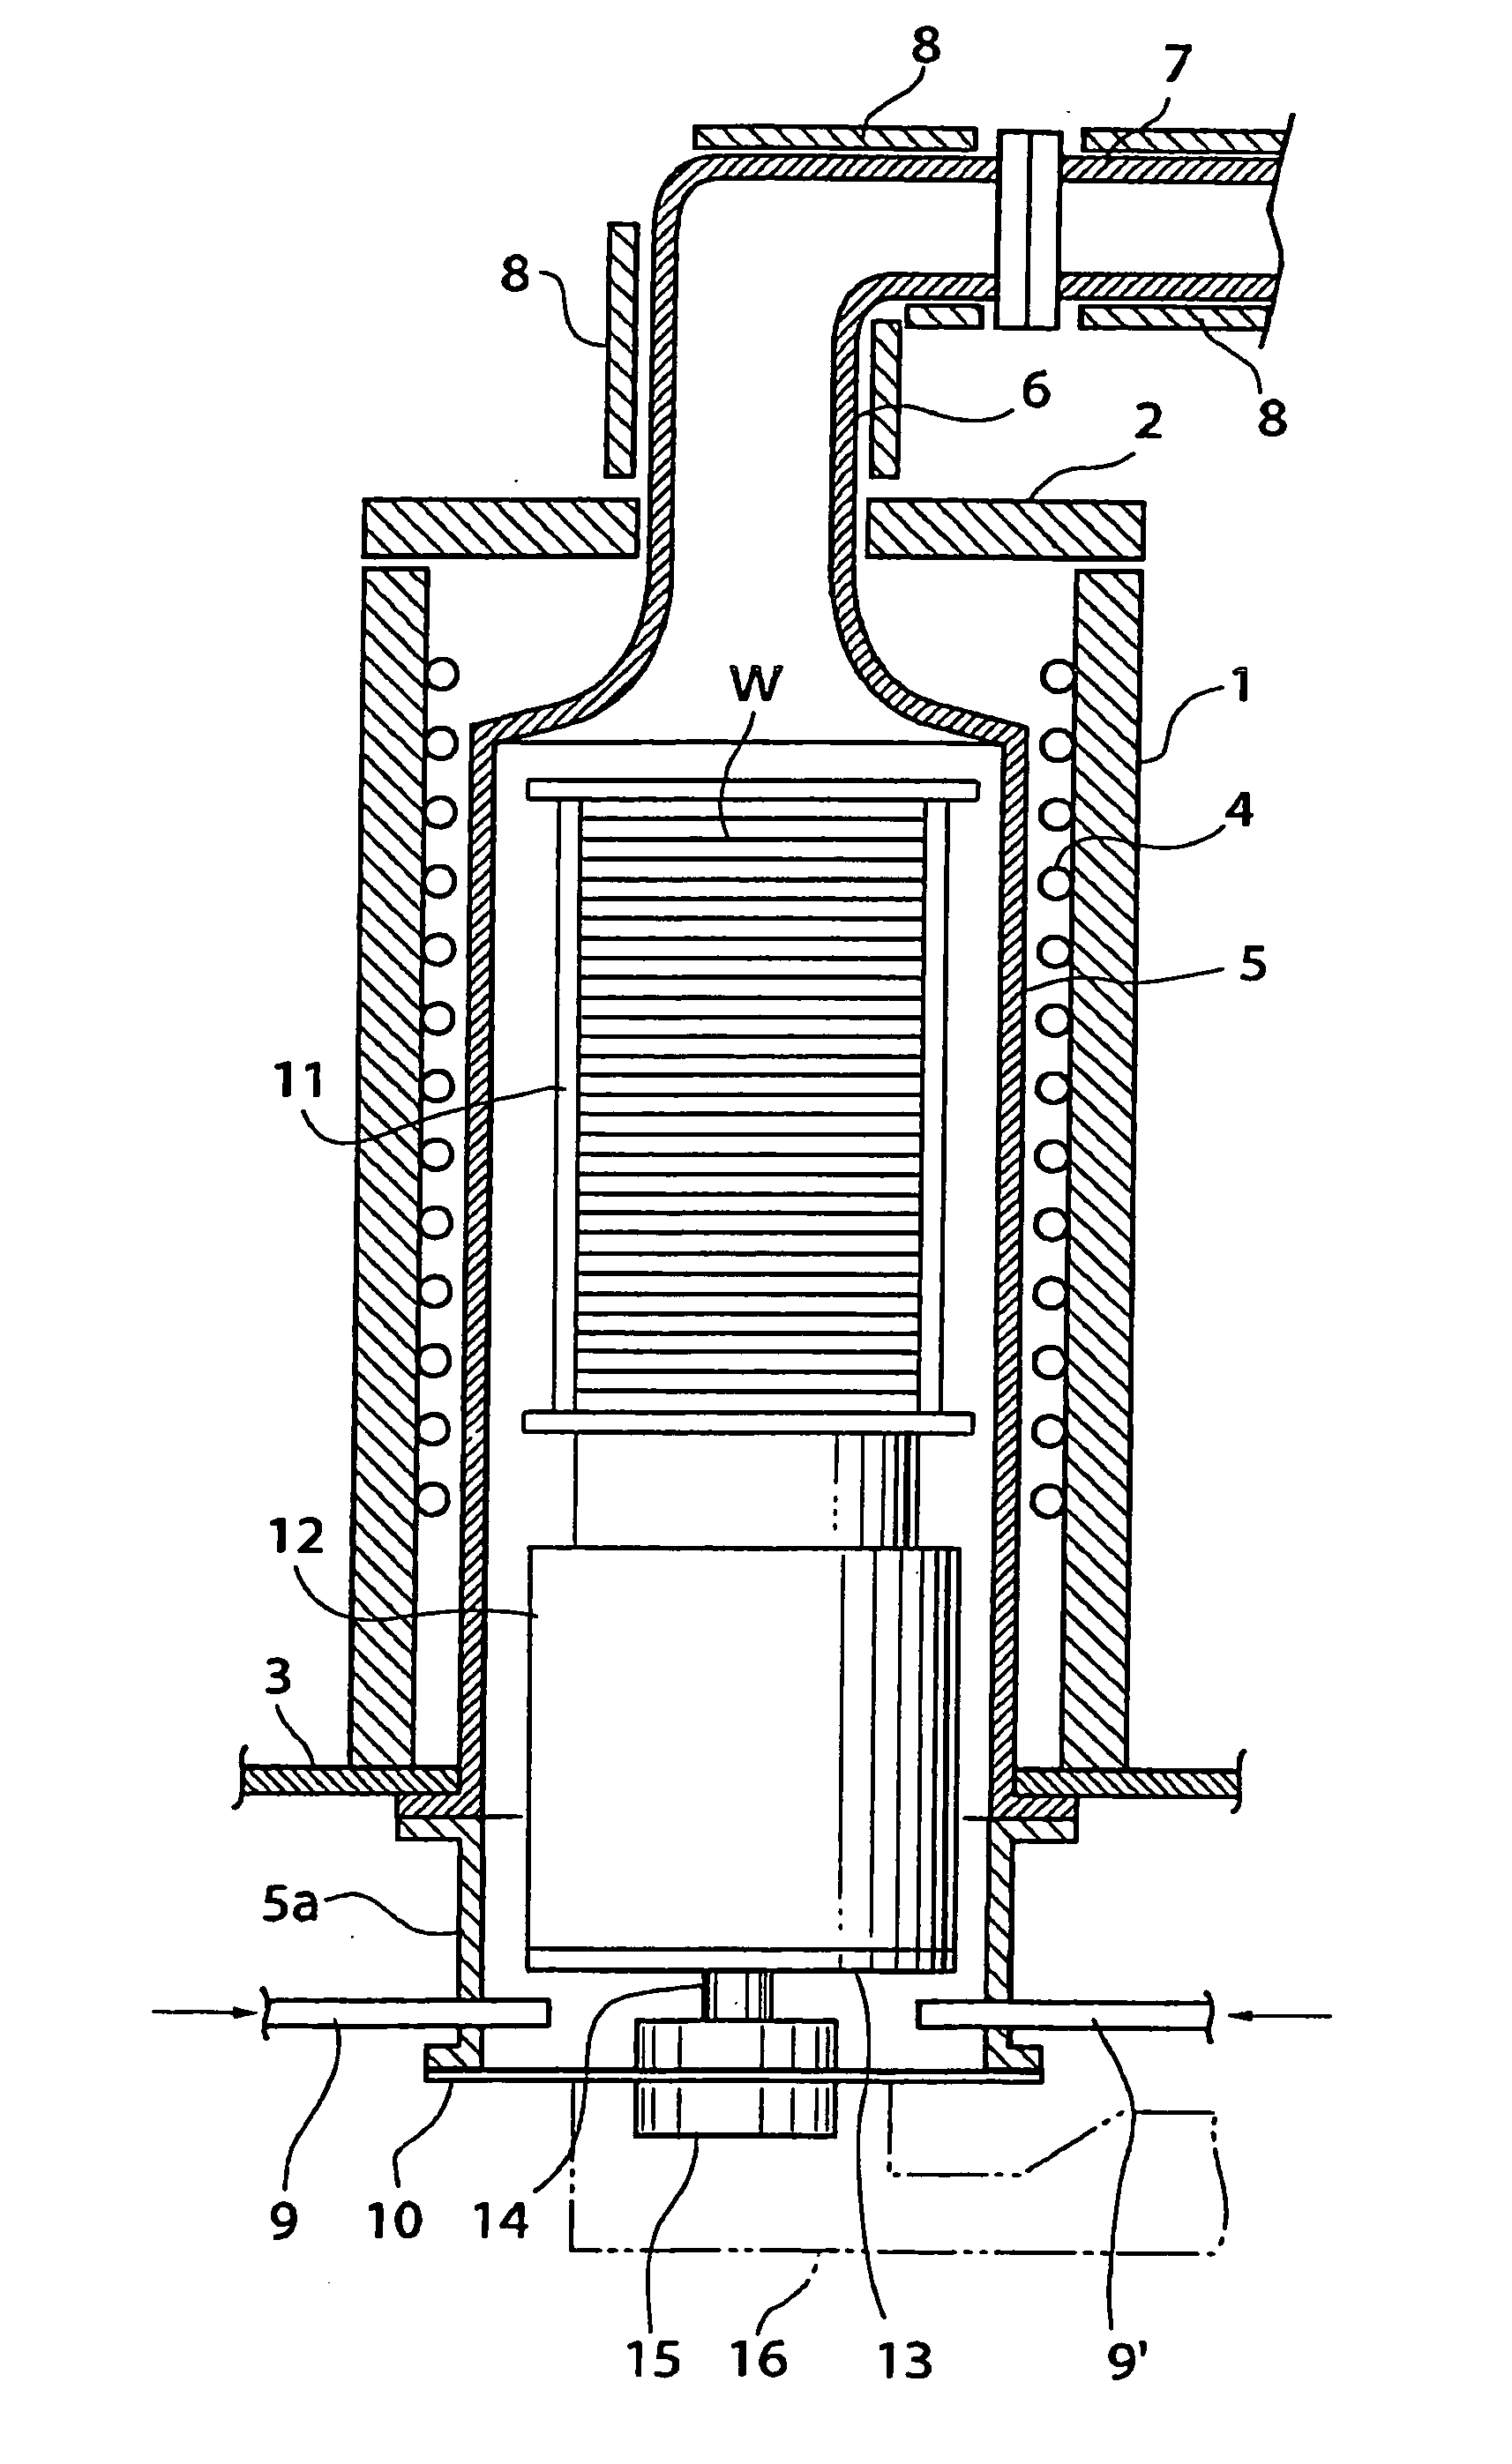 Thermal treating apparatus